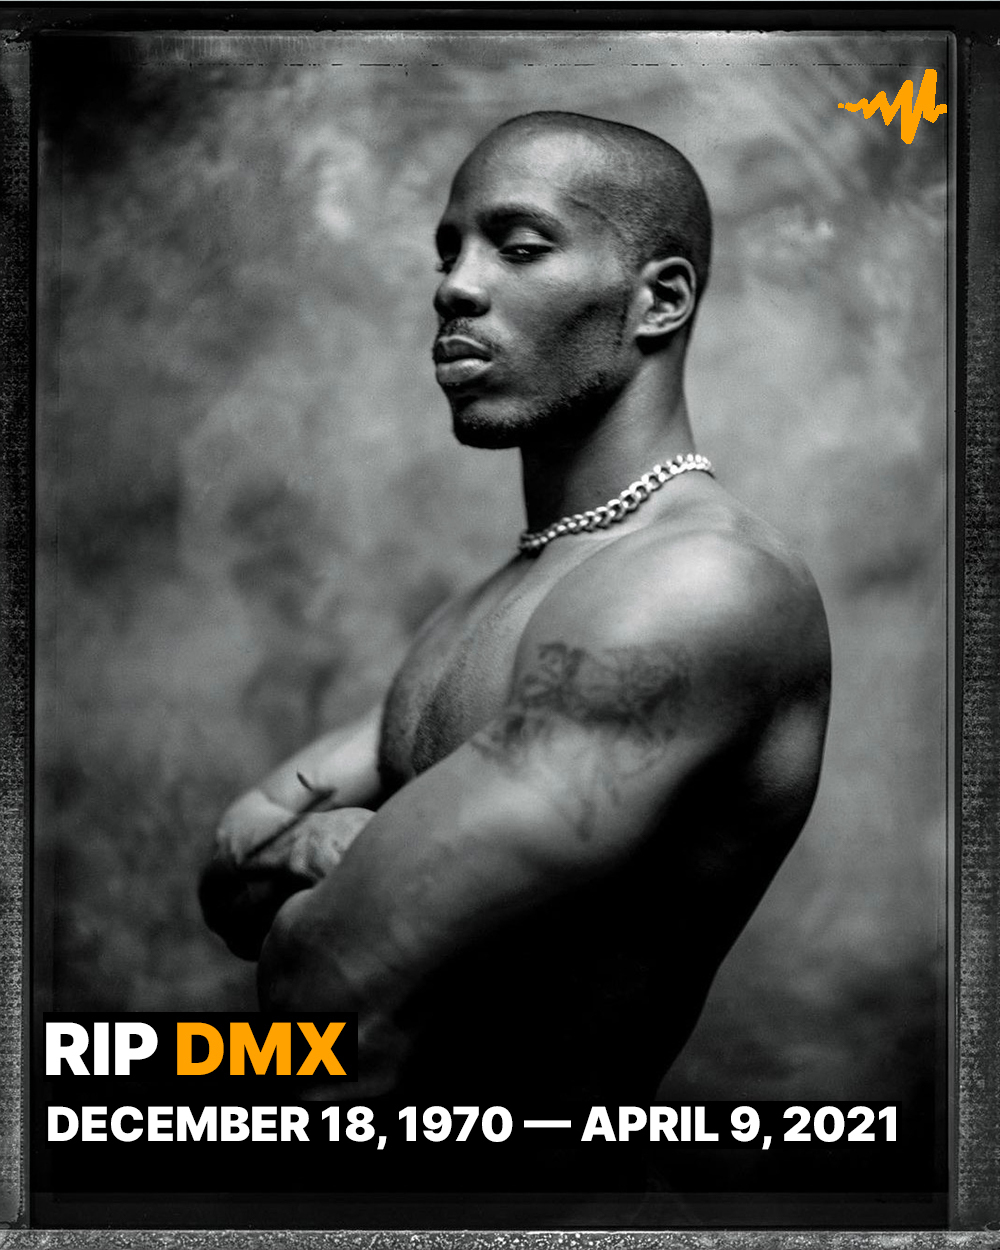 R.I.P DMX 🙏🏿, R.I.P DMX 🙏🏿 His Last Emotional Words To His Fans.. ❤, By Hip Hop Evolution